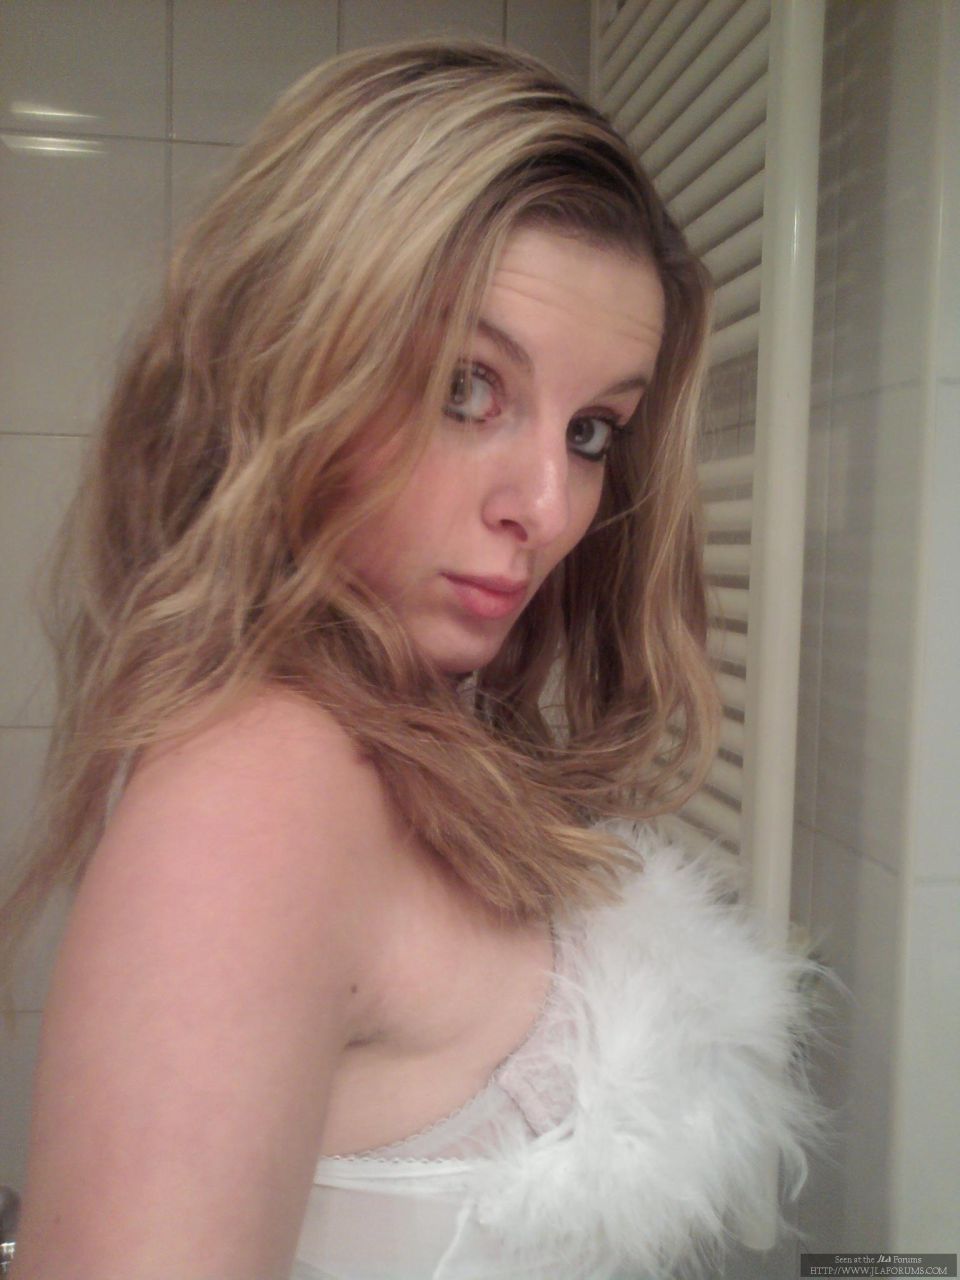 lisa kelly nude leaked photos 1a6813d